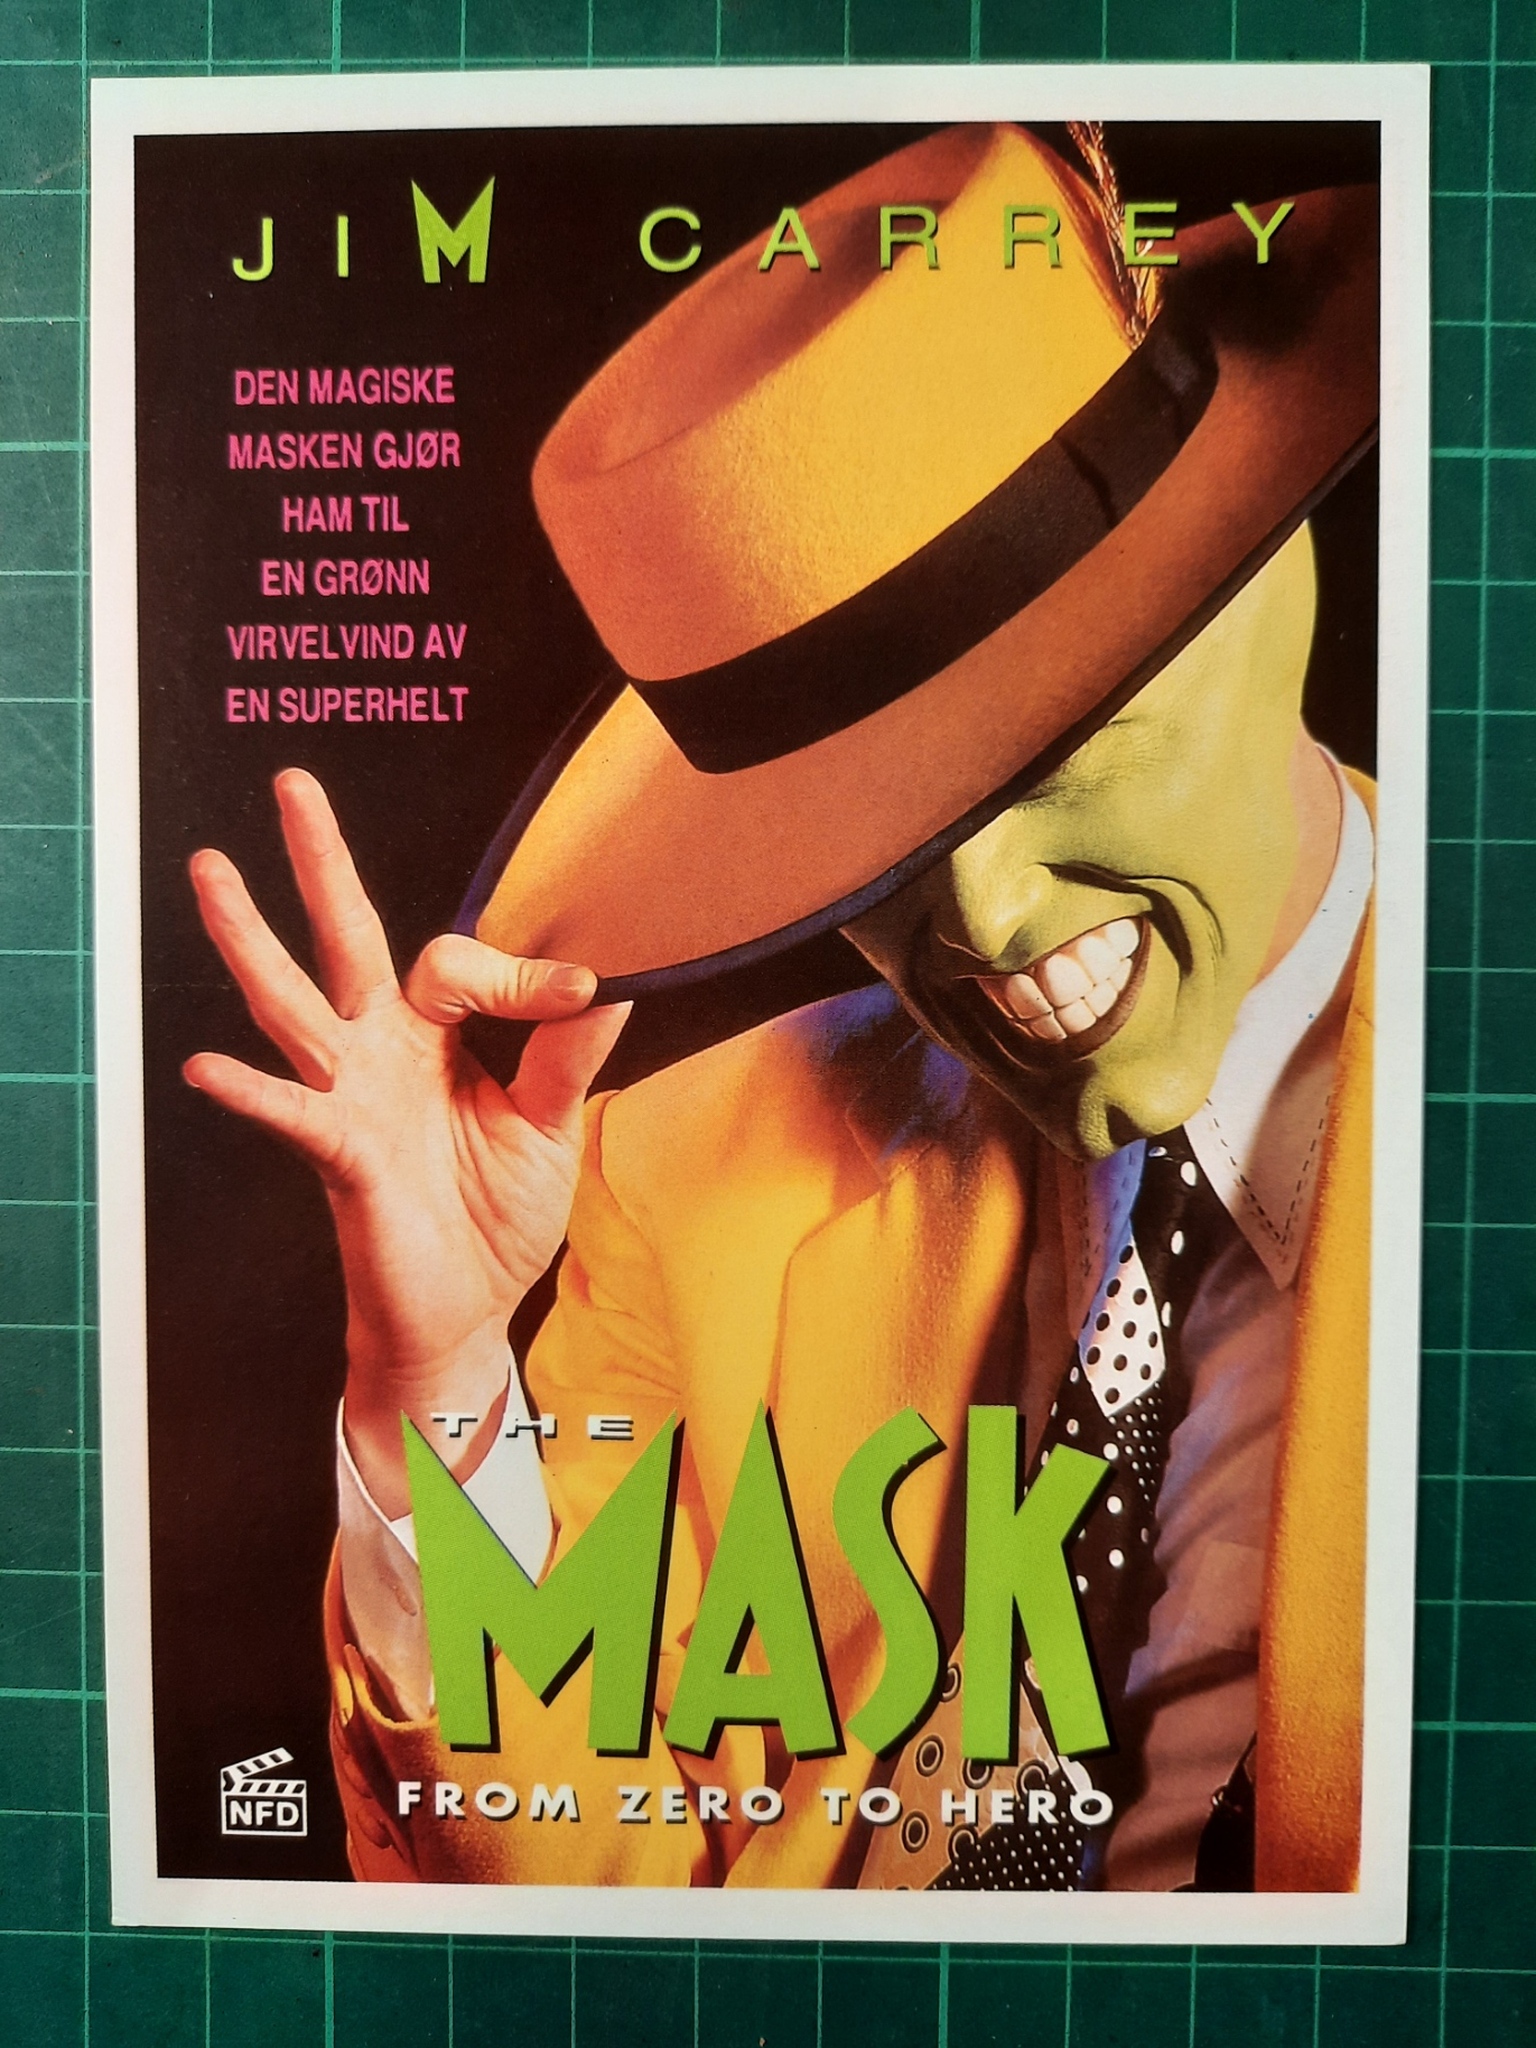 NFD kino - Mask